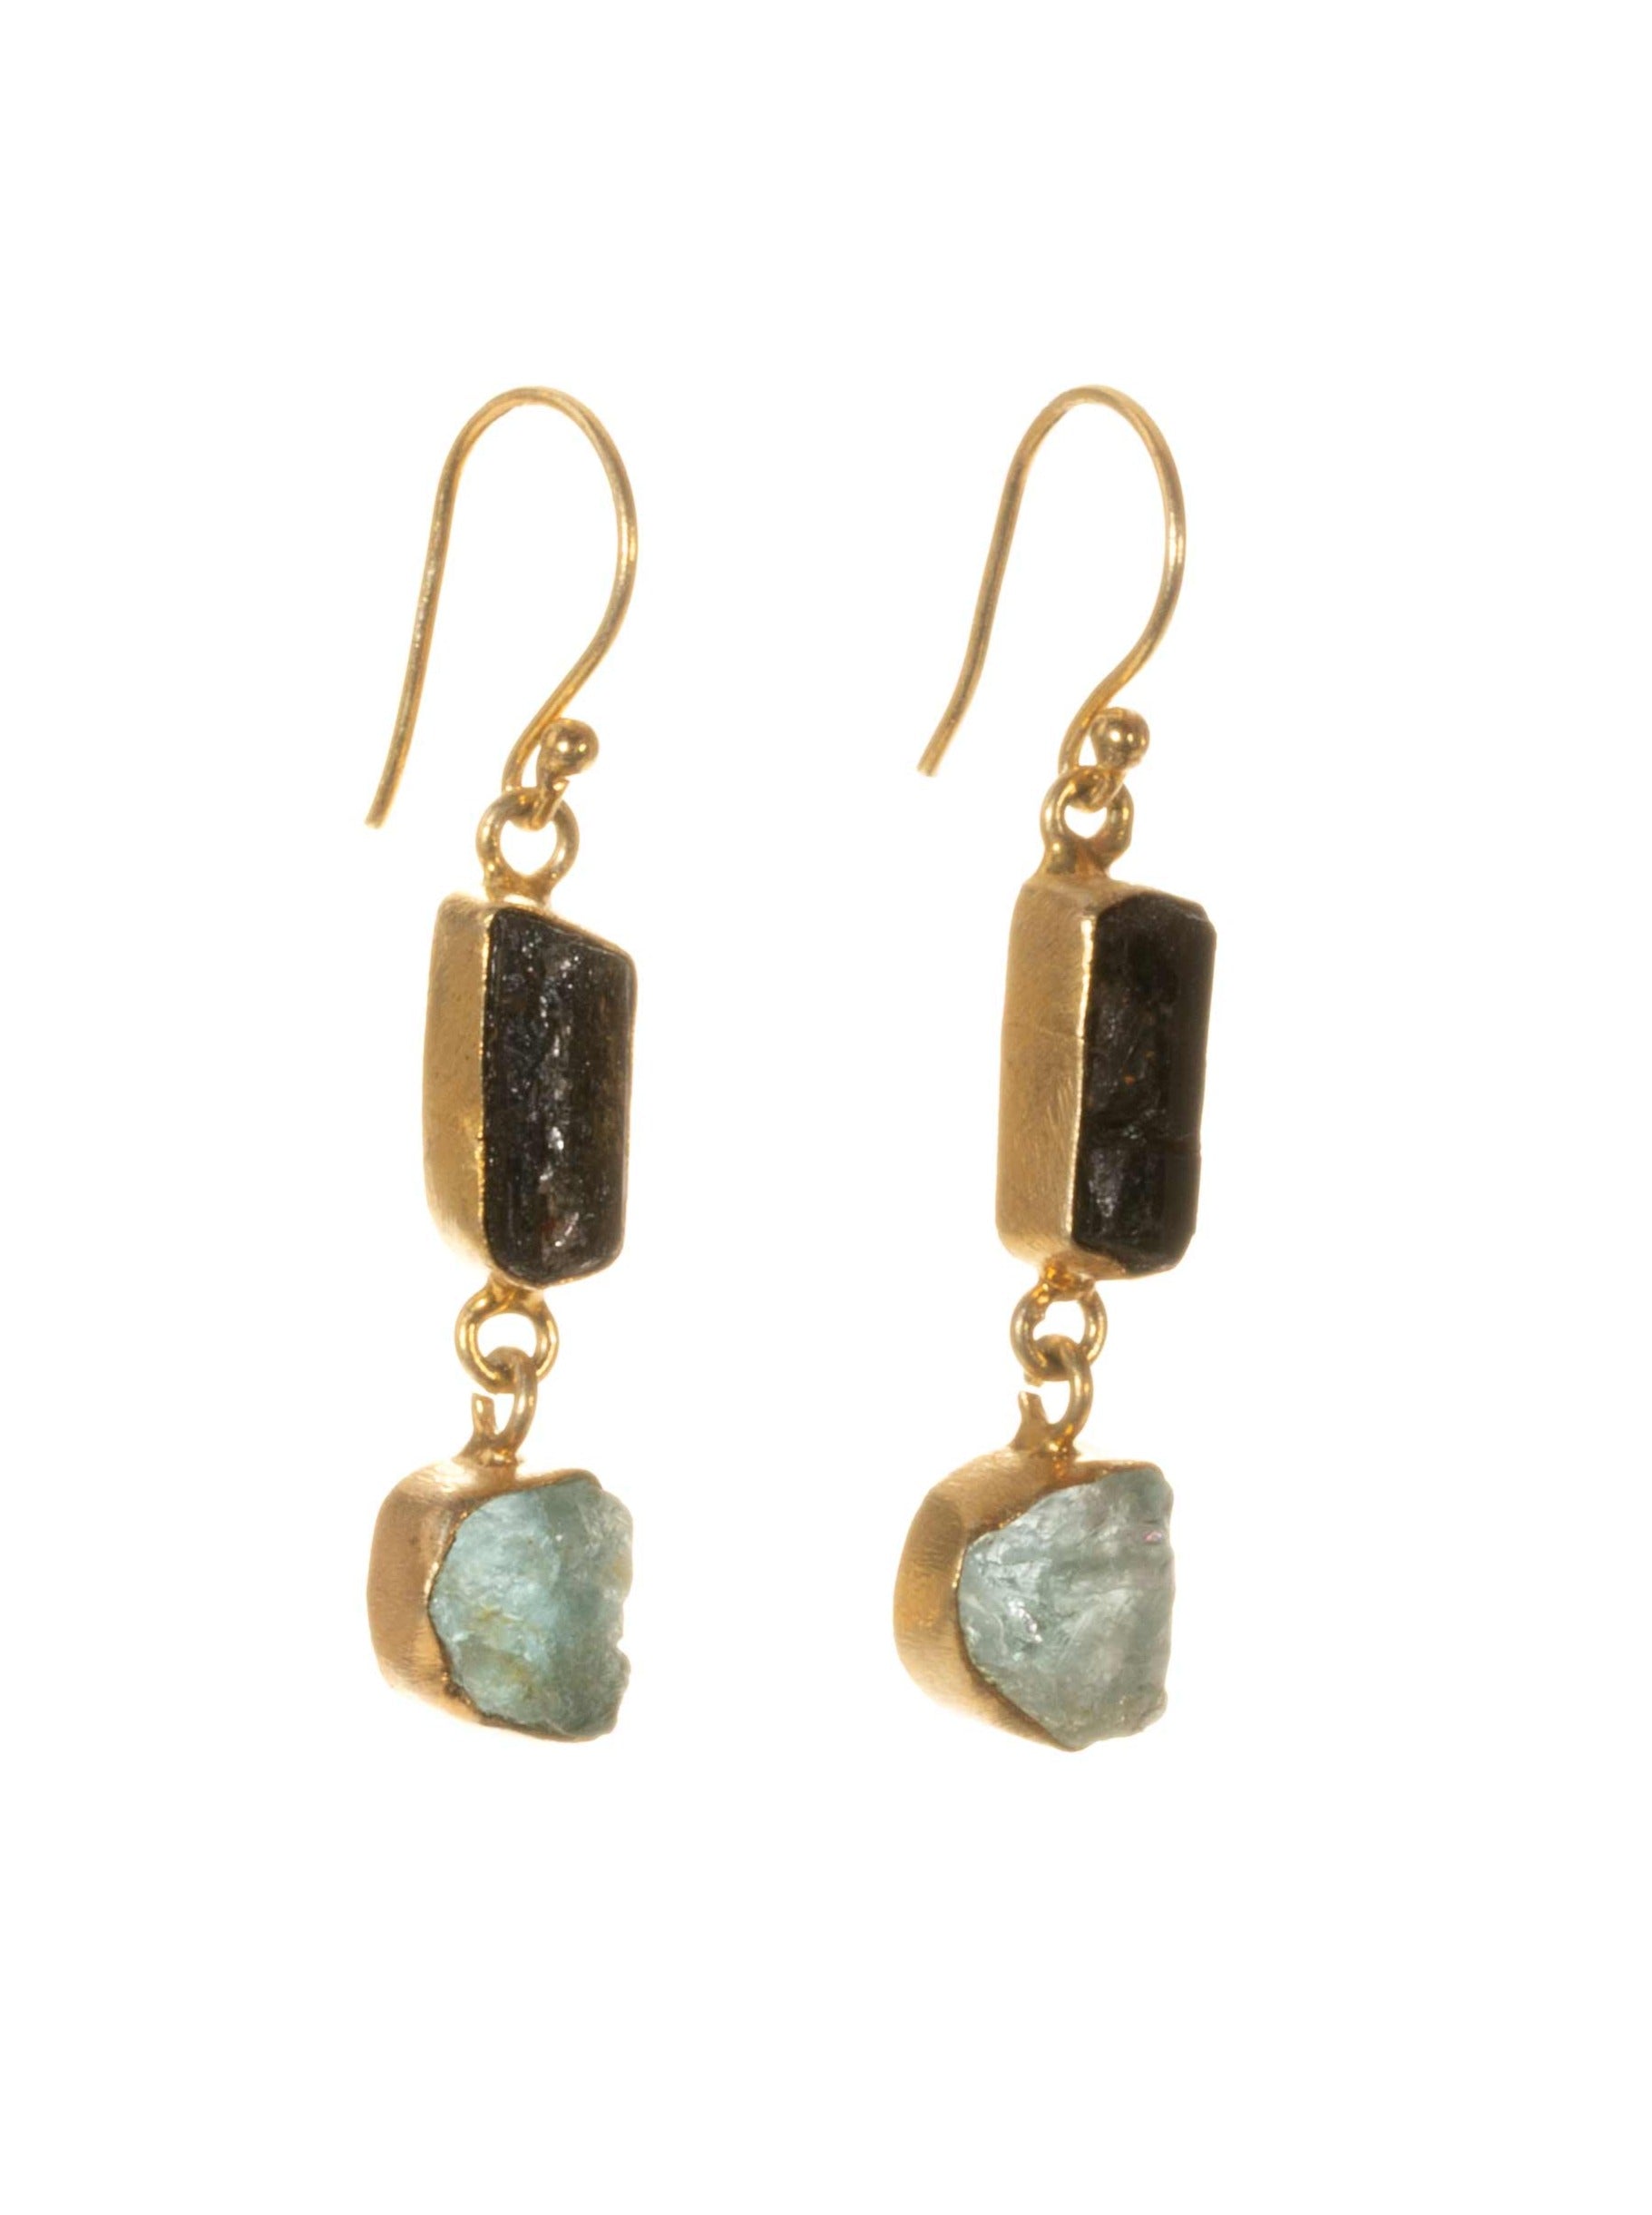 Black tourmaline and aqua marine gold earrings